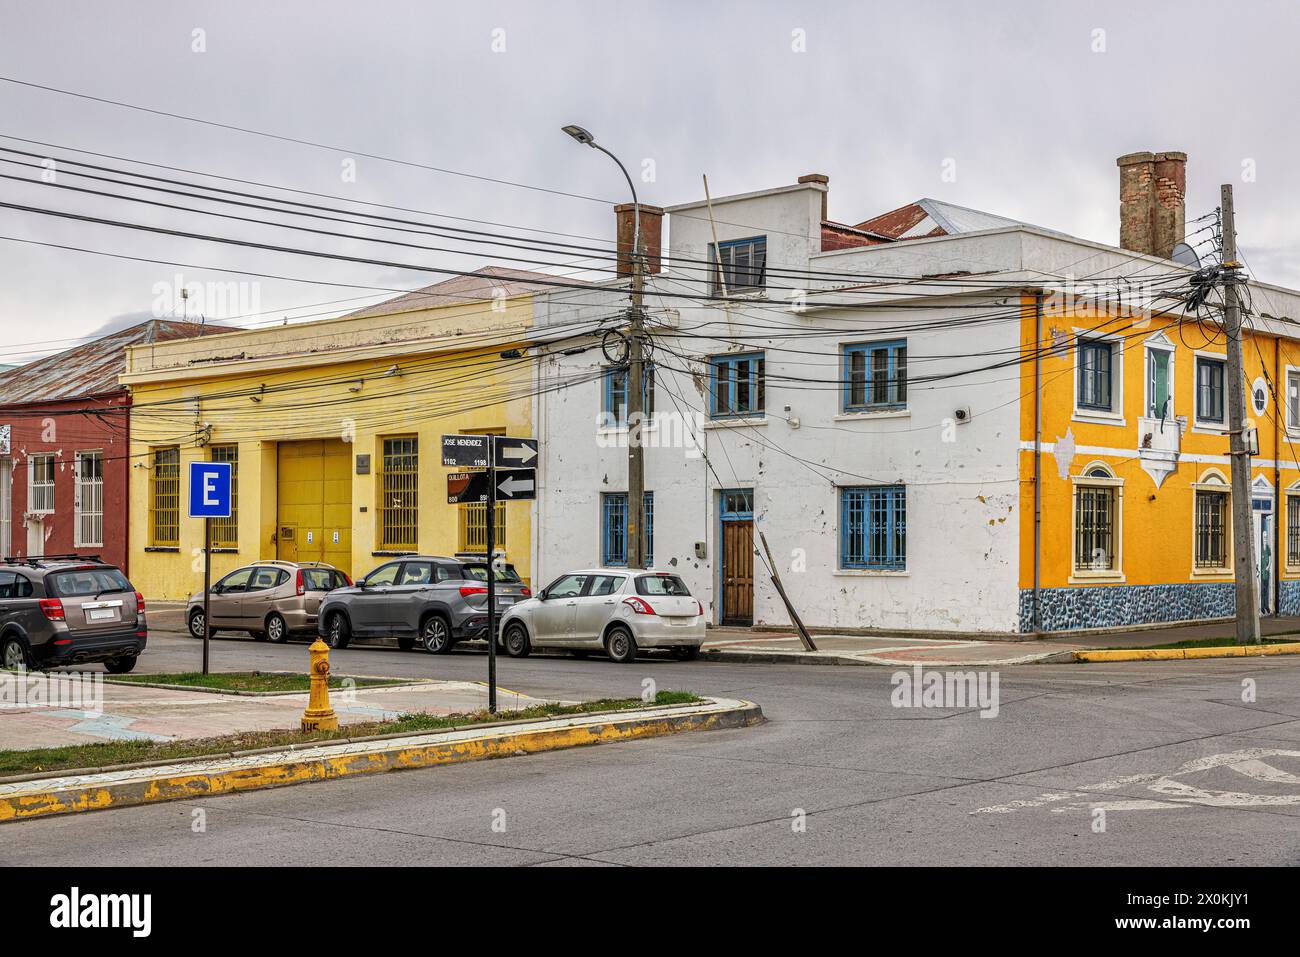 Colorful houses at a crossroads. Punta Arenas, Patagonia y la Antarctica Chilena, Chile. Stock Photo